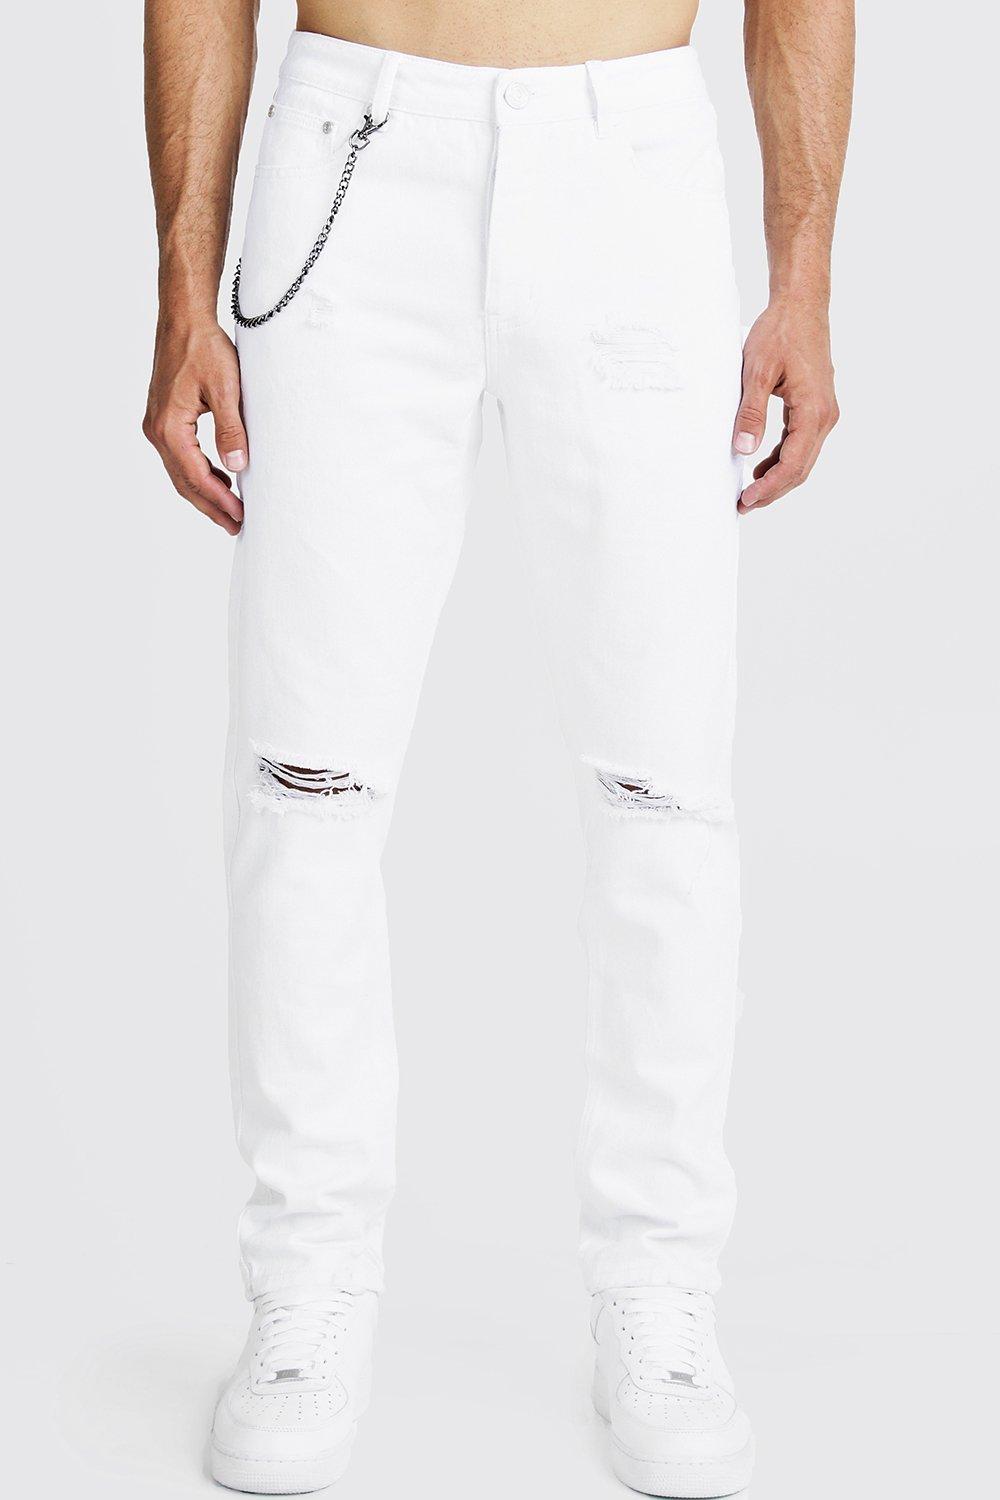 white distressed pants